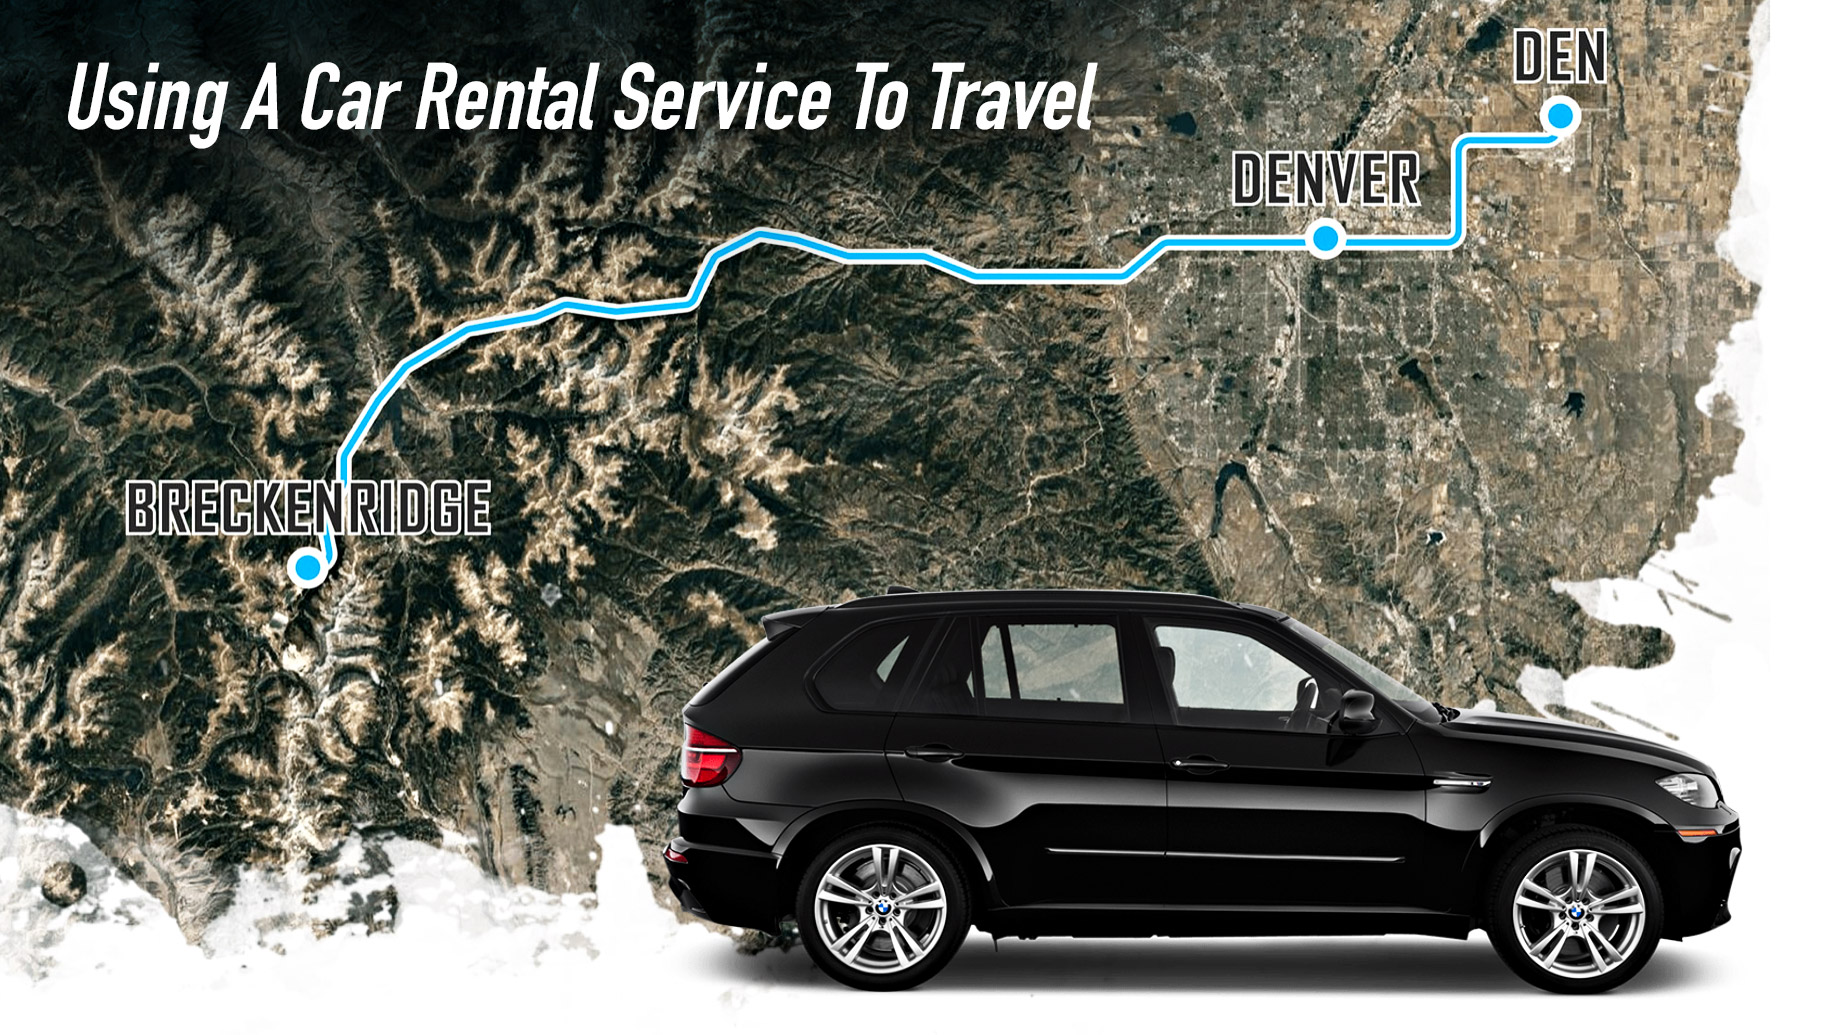 Using A Car Rental Service To Travel From Breckenridge To Denver, Colorado